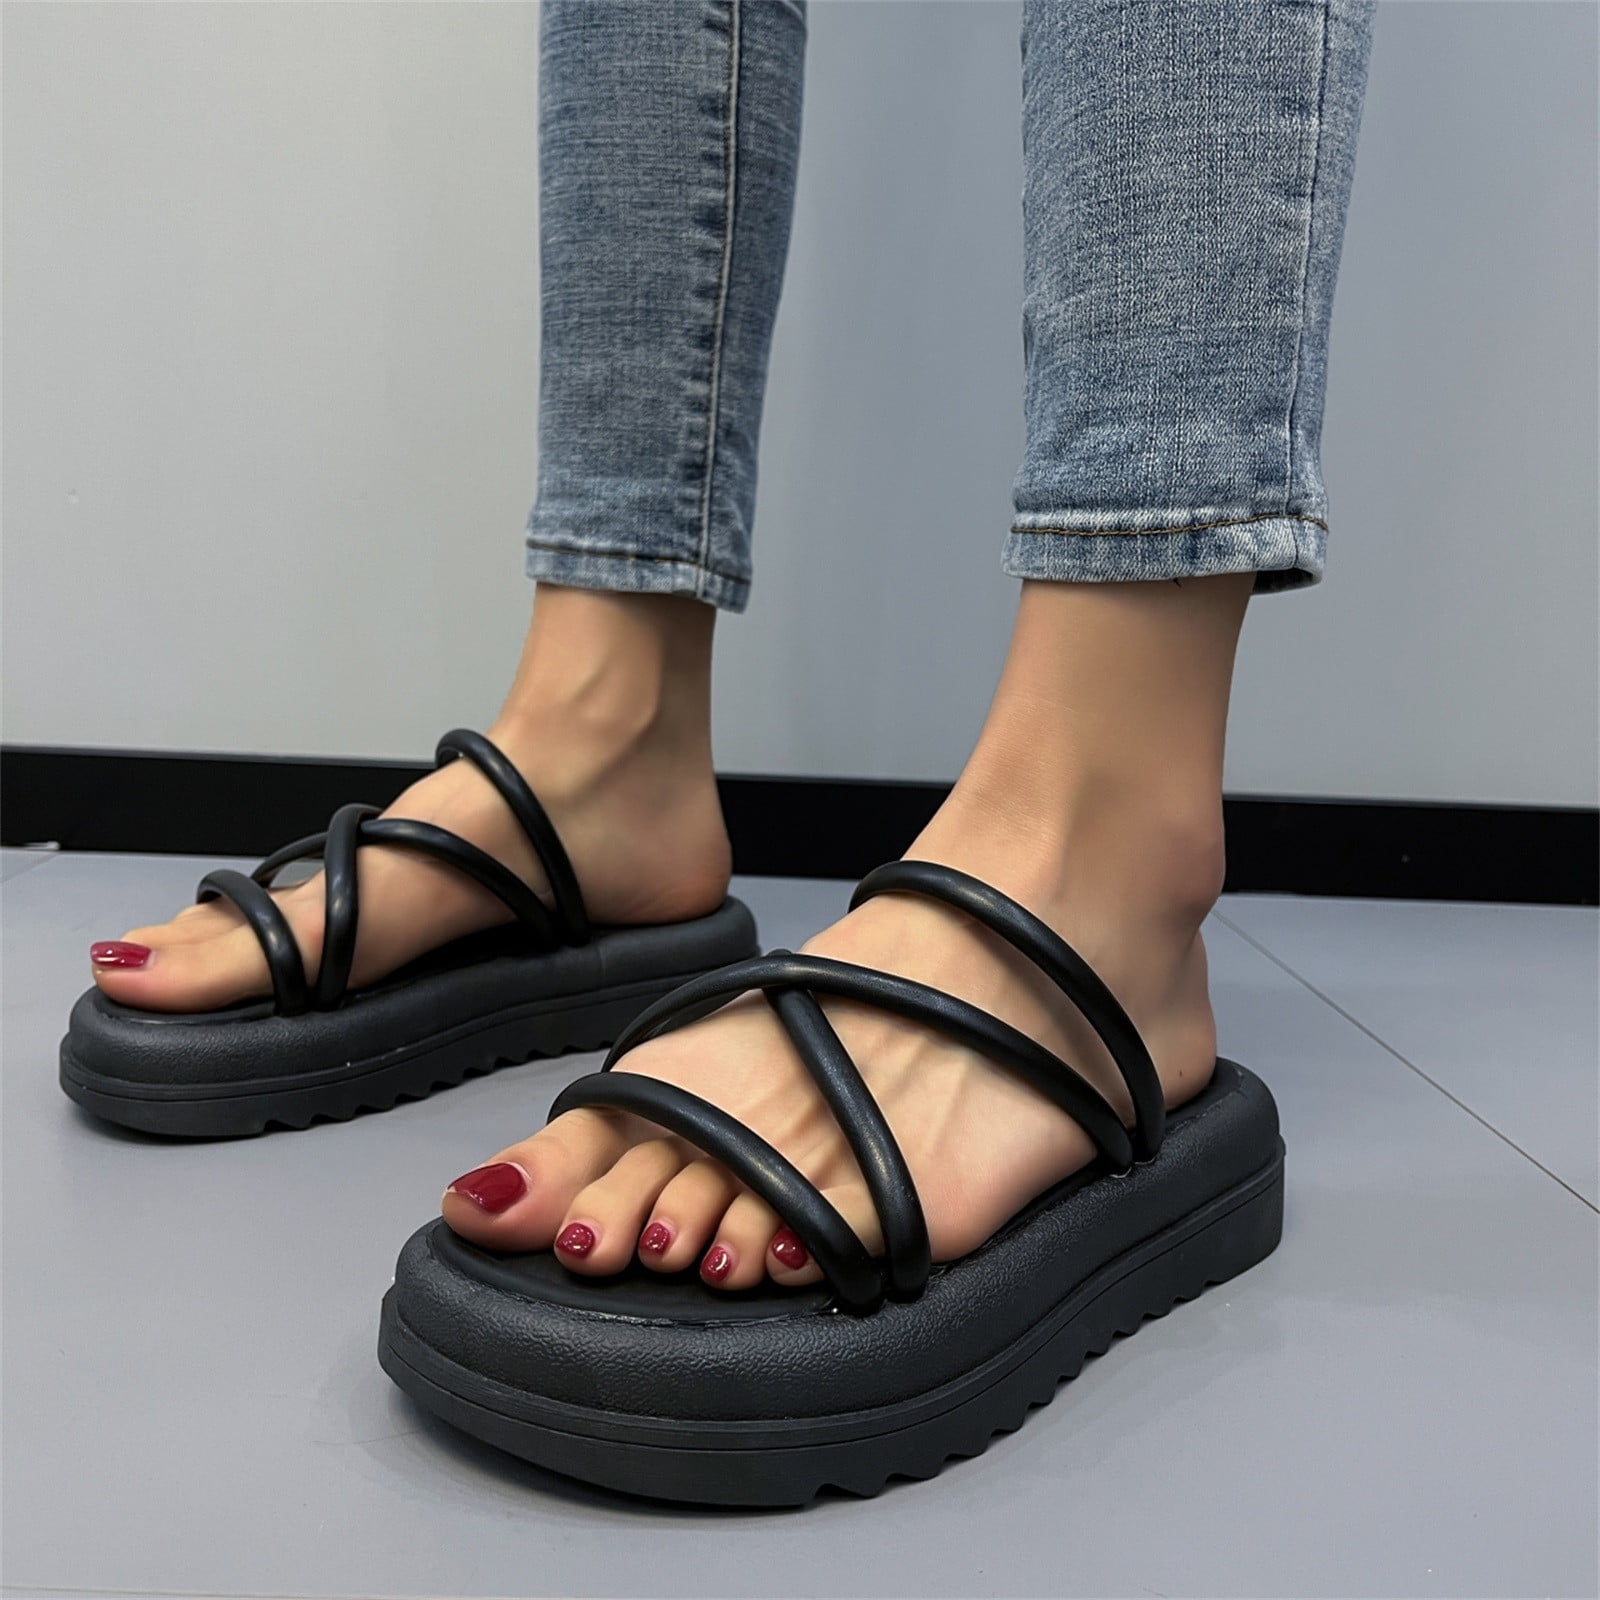 PEASKJP Sandals forMen Dressy Summer Men Summer Comfortable Flat Beach  Sandals Slippers Light Non Slip Sandals Mens Open Toe Sandals Black 8.5